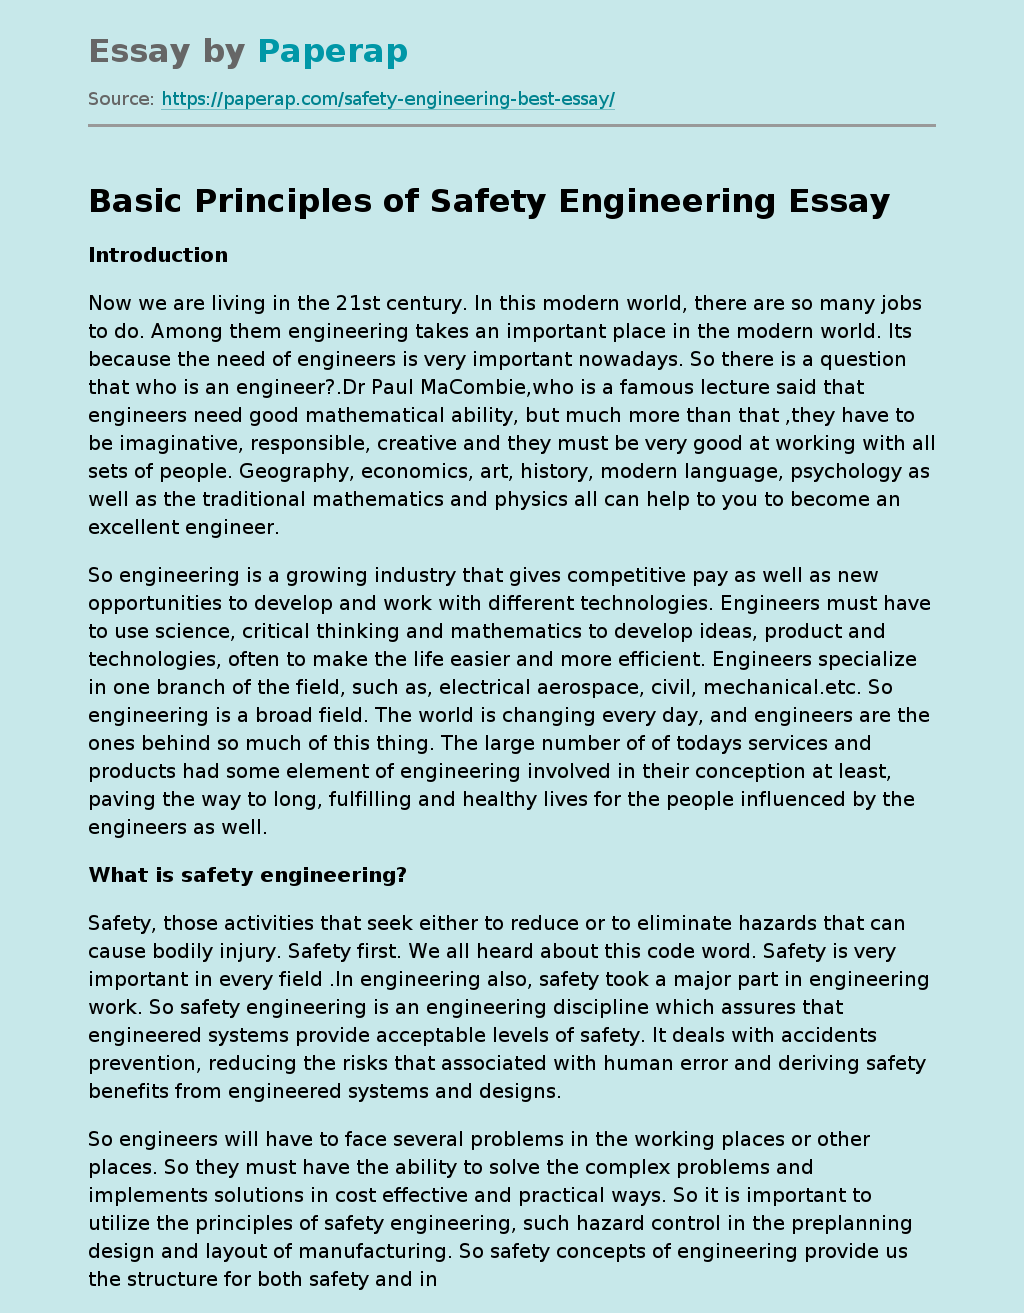 Basic Principles of Safety Engineering